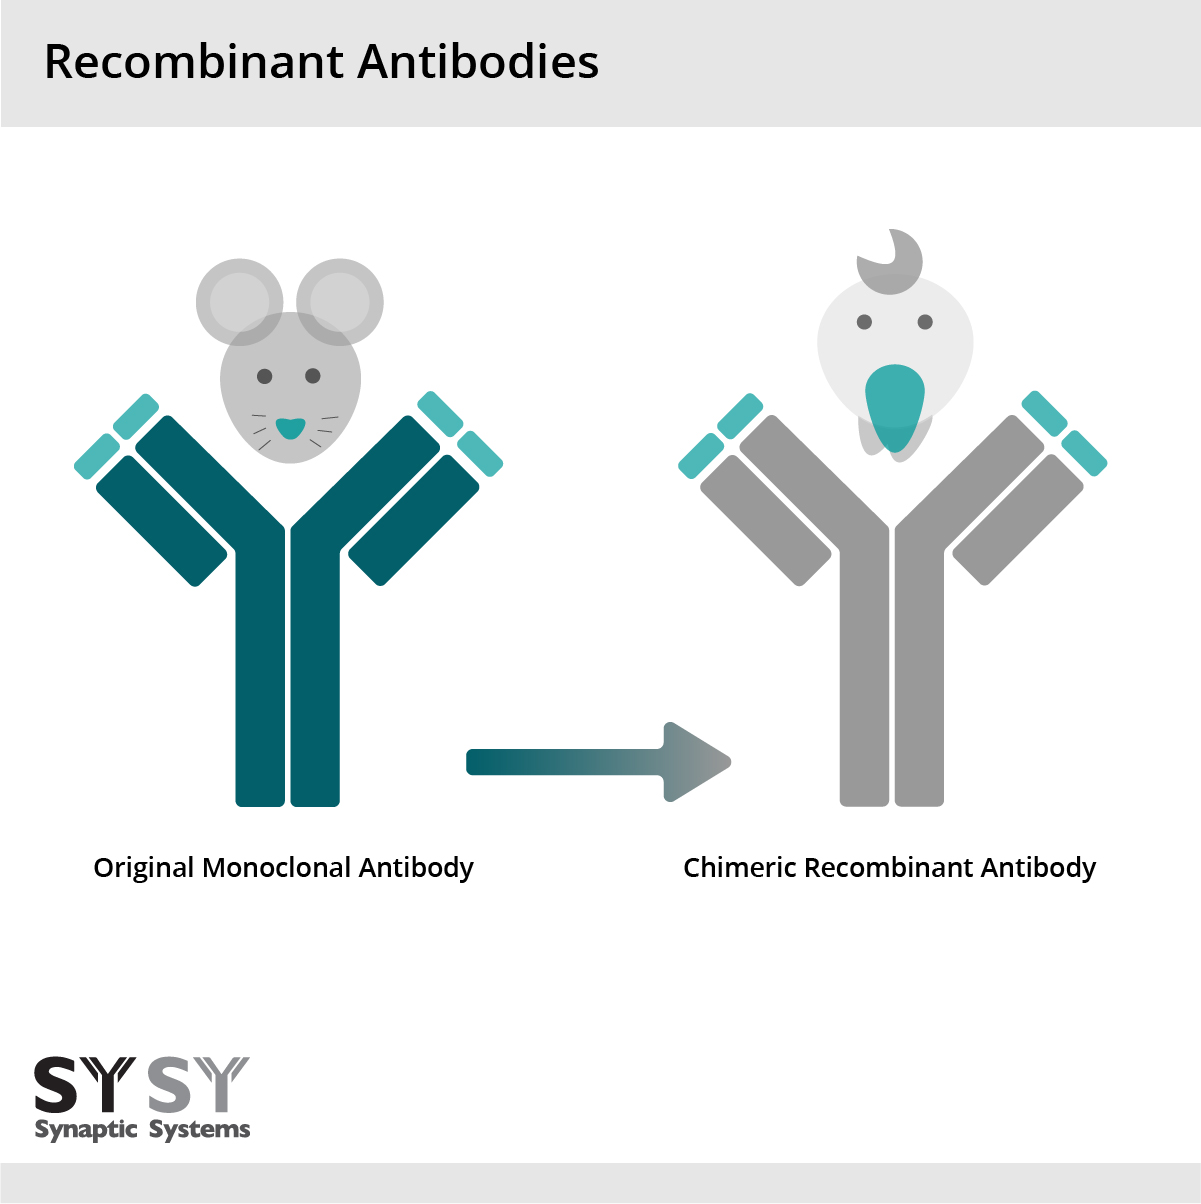 A chimeric recombinant antibody